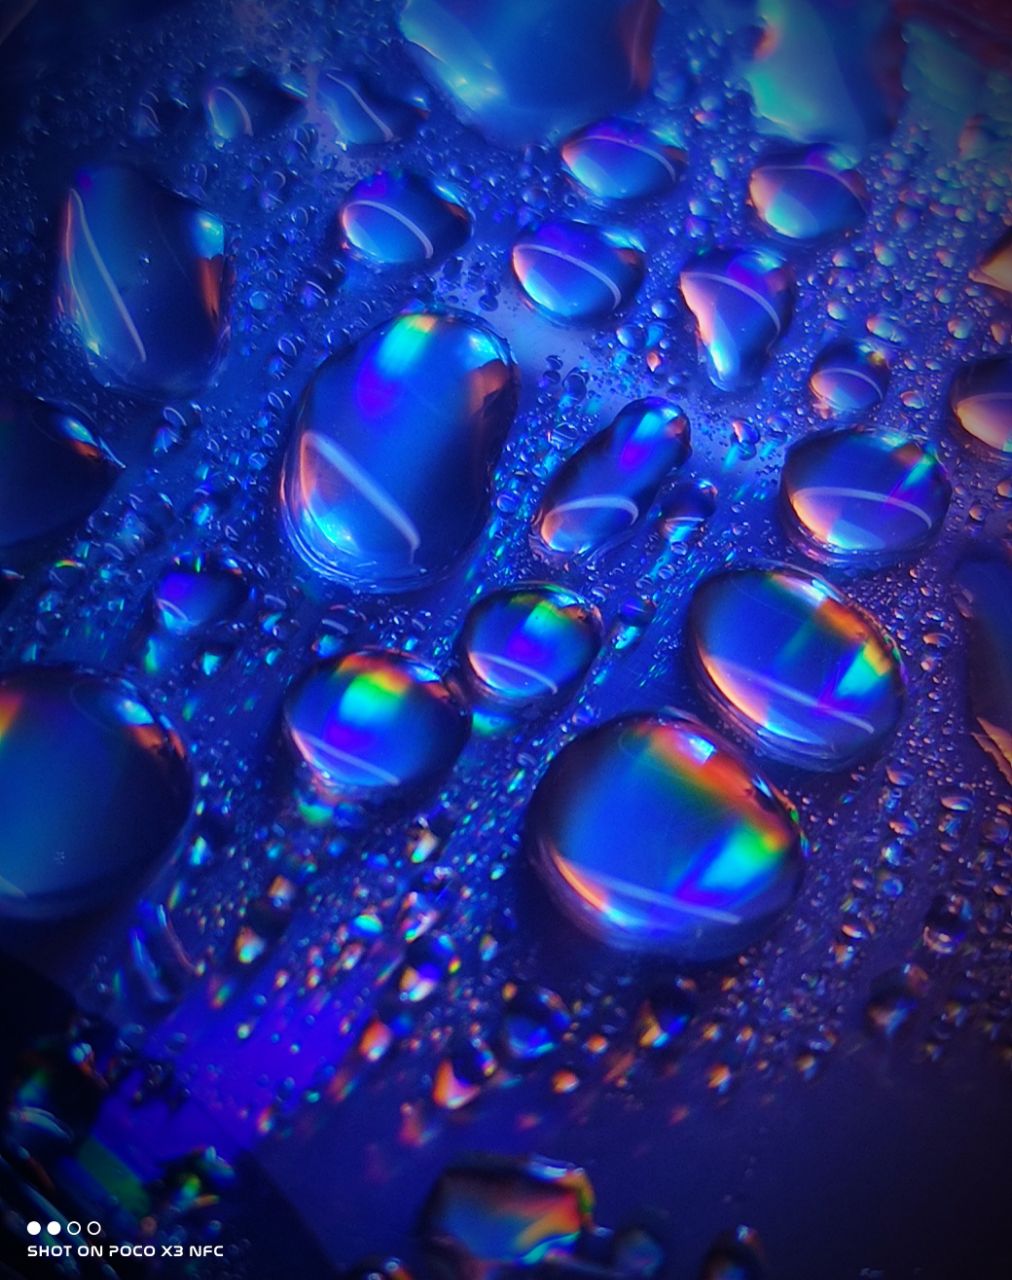 a close up of a purple liquid